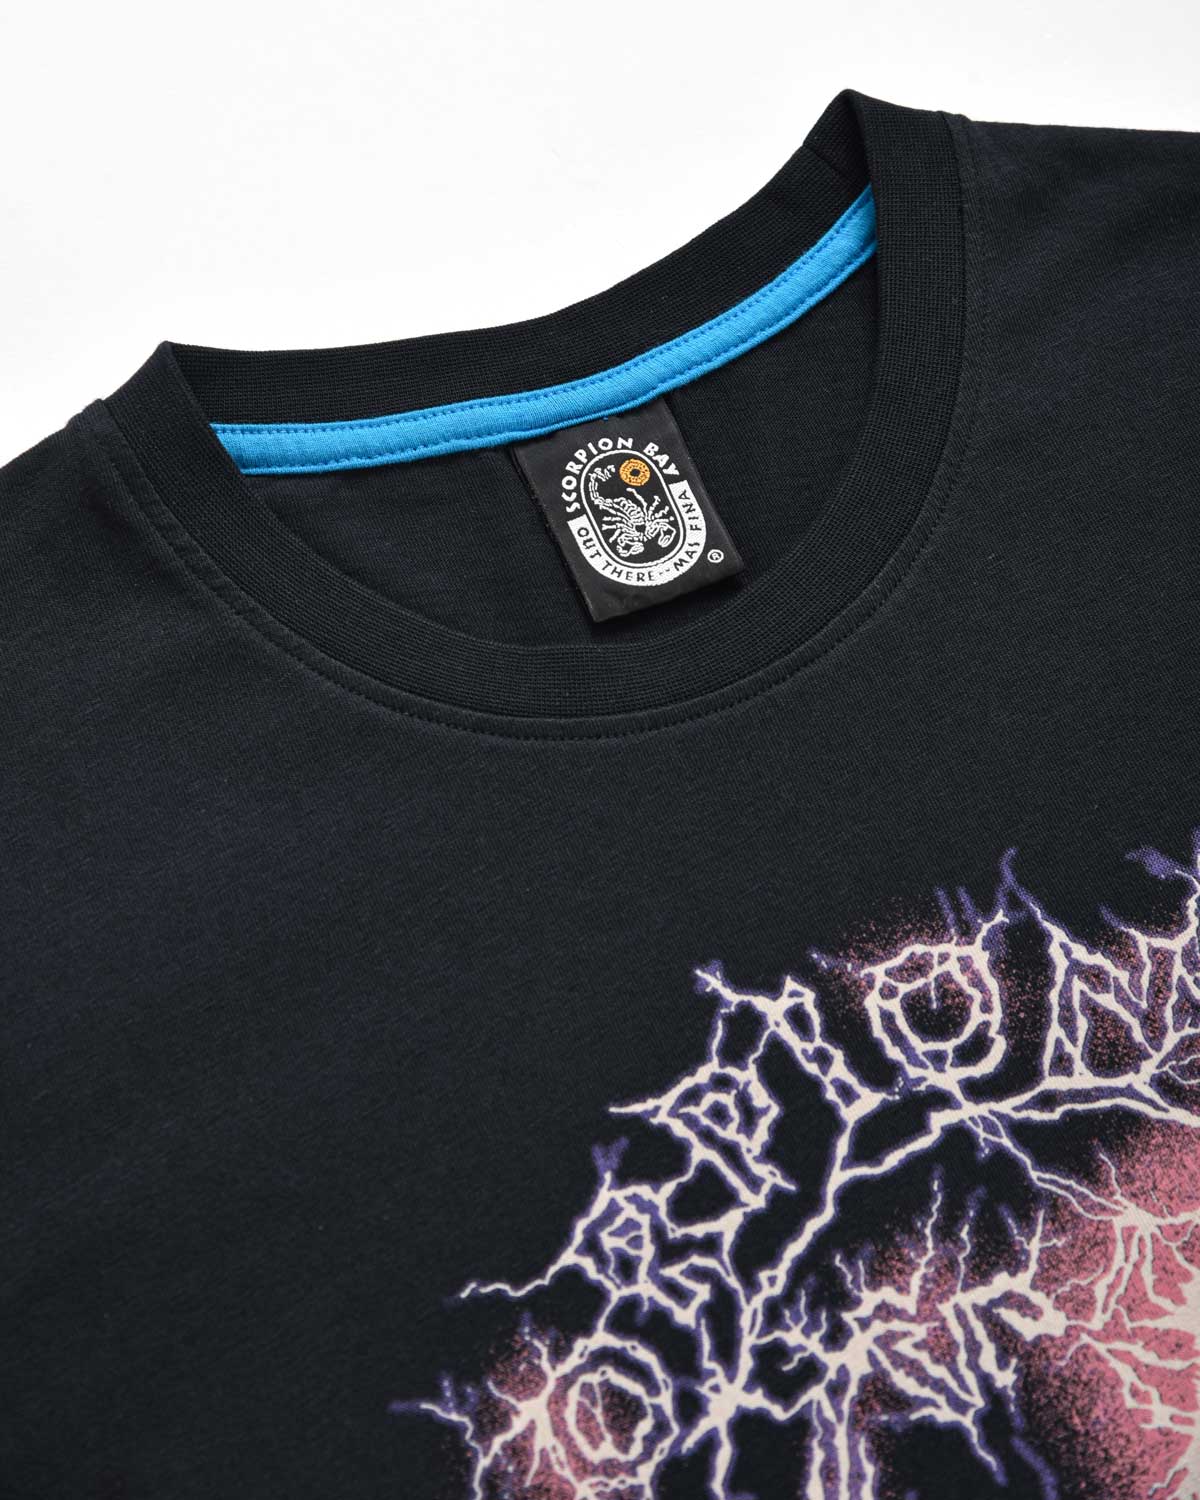 Bambino | T-Shirt Nera A Maniche Lunghe 100% Cotone Con Stampa "Thunder Bay"